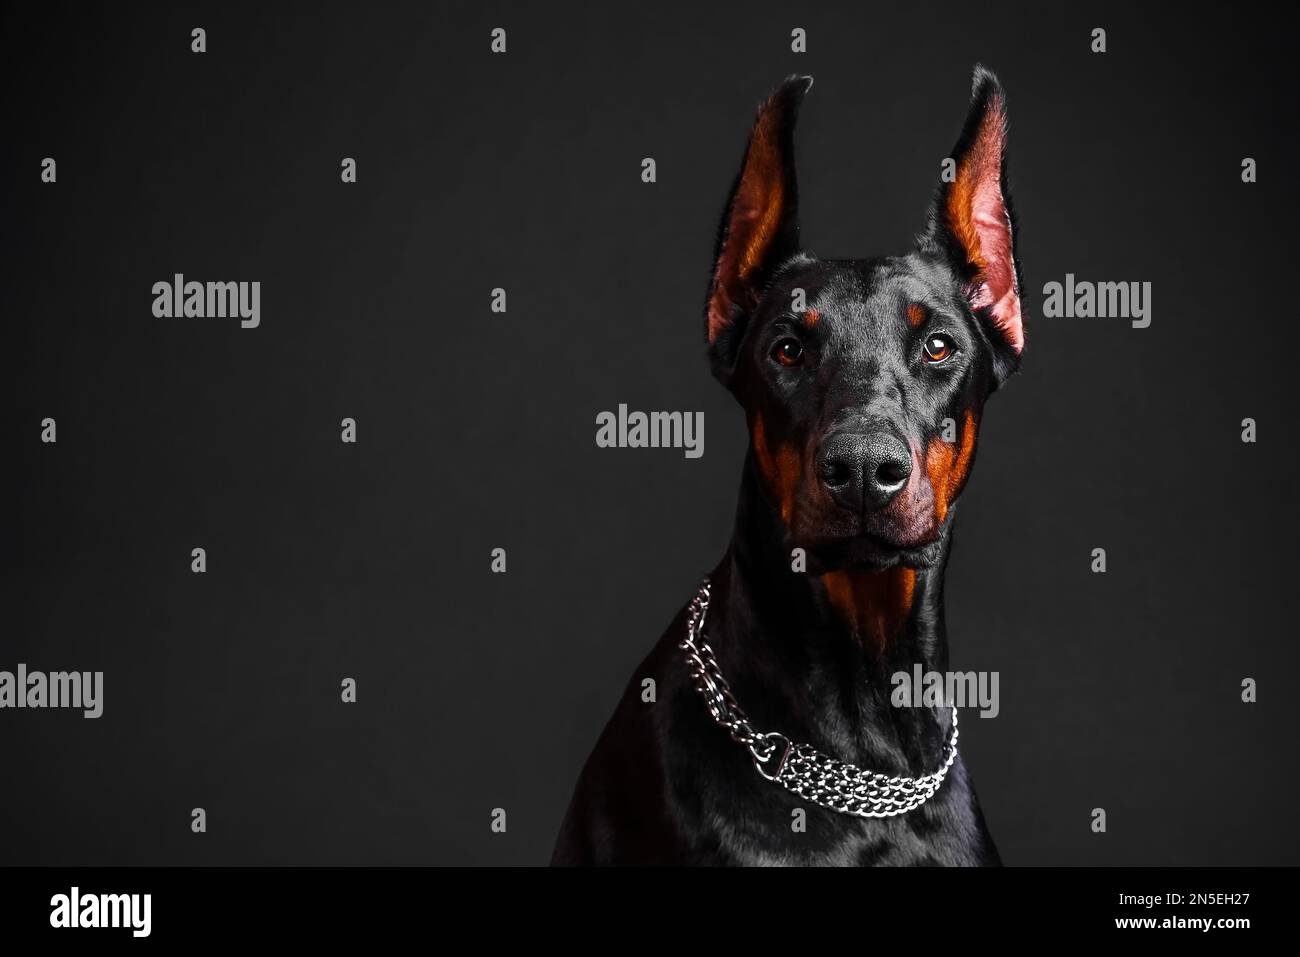 Doberman dog breed on a dark background Stock Photo